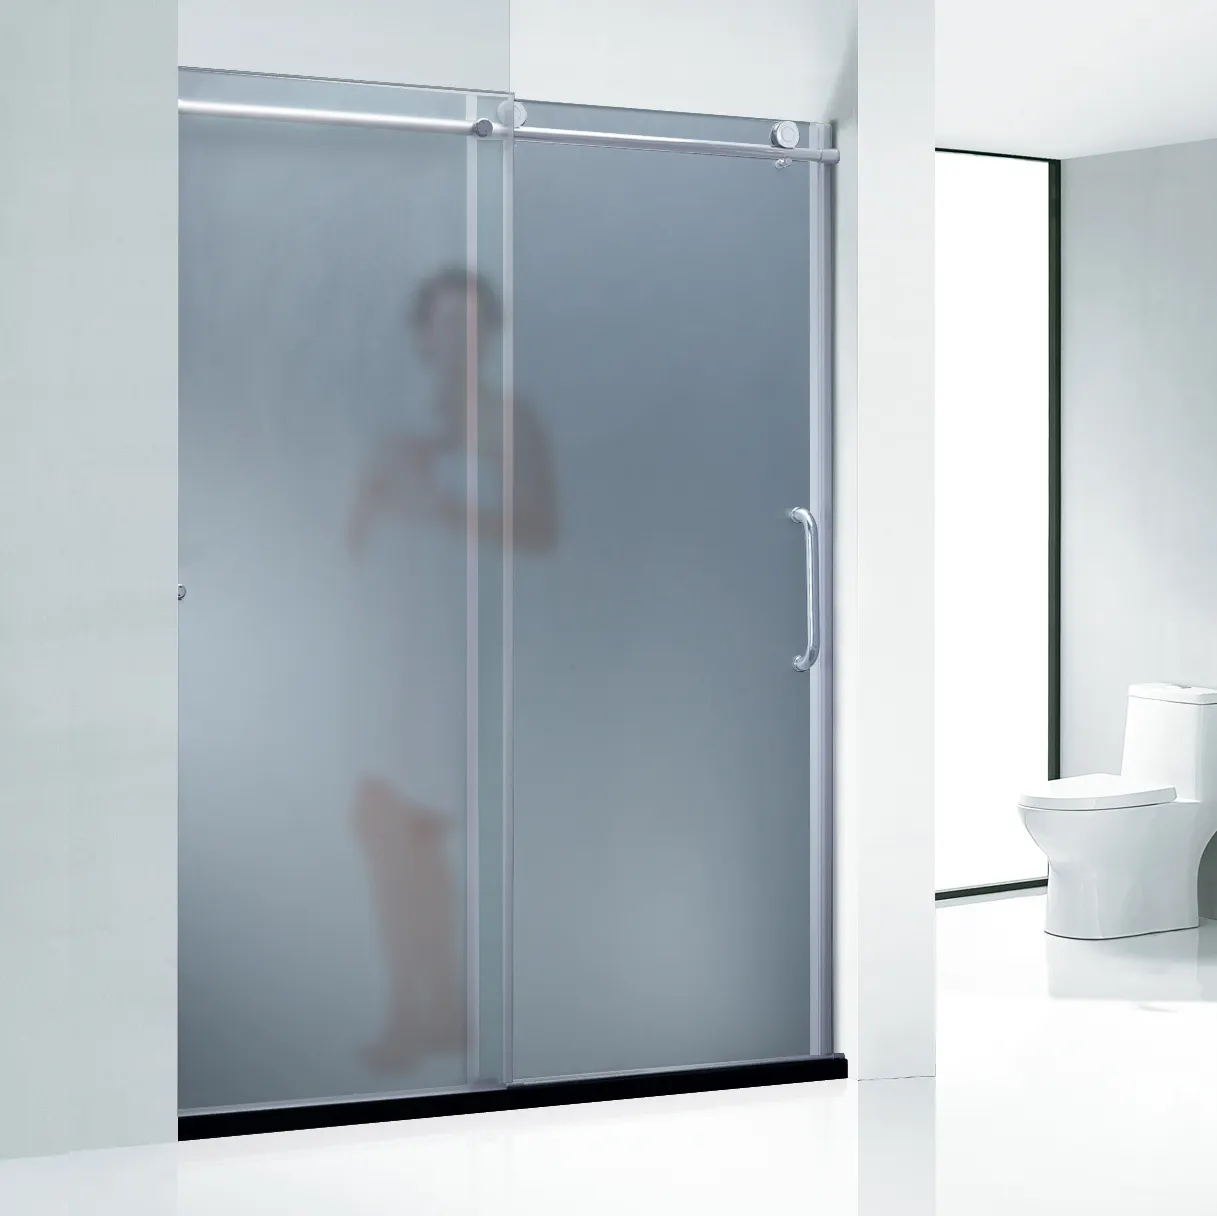 KMRY Square Frameless Tempered Glass Pivot Hinge Corner Bathroom Glass Shower Enclosure Cabin Room